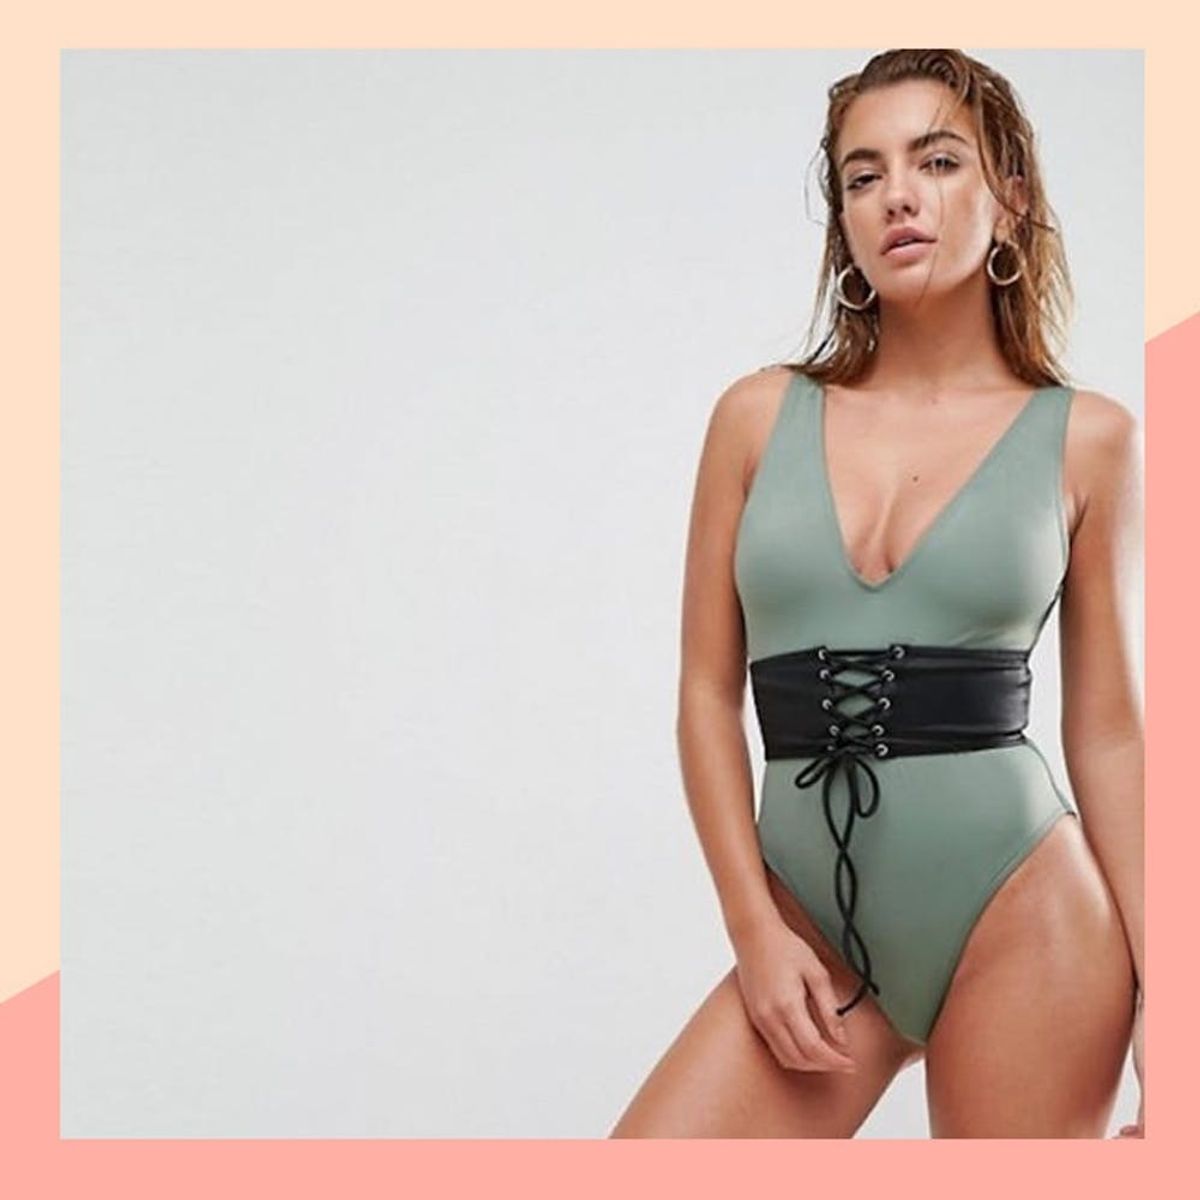 ASOS’ New Eco-Friendly Swimwear Line Makes Green Look Gorgeous